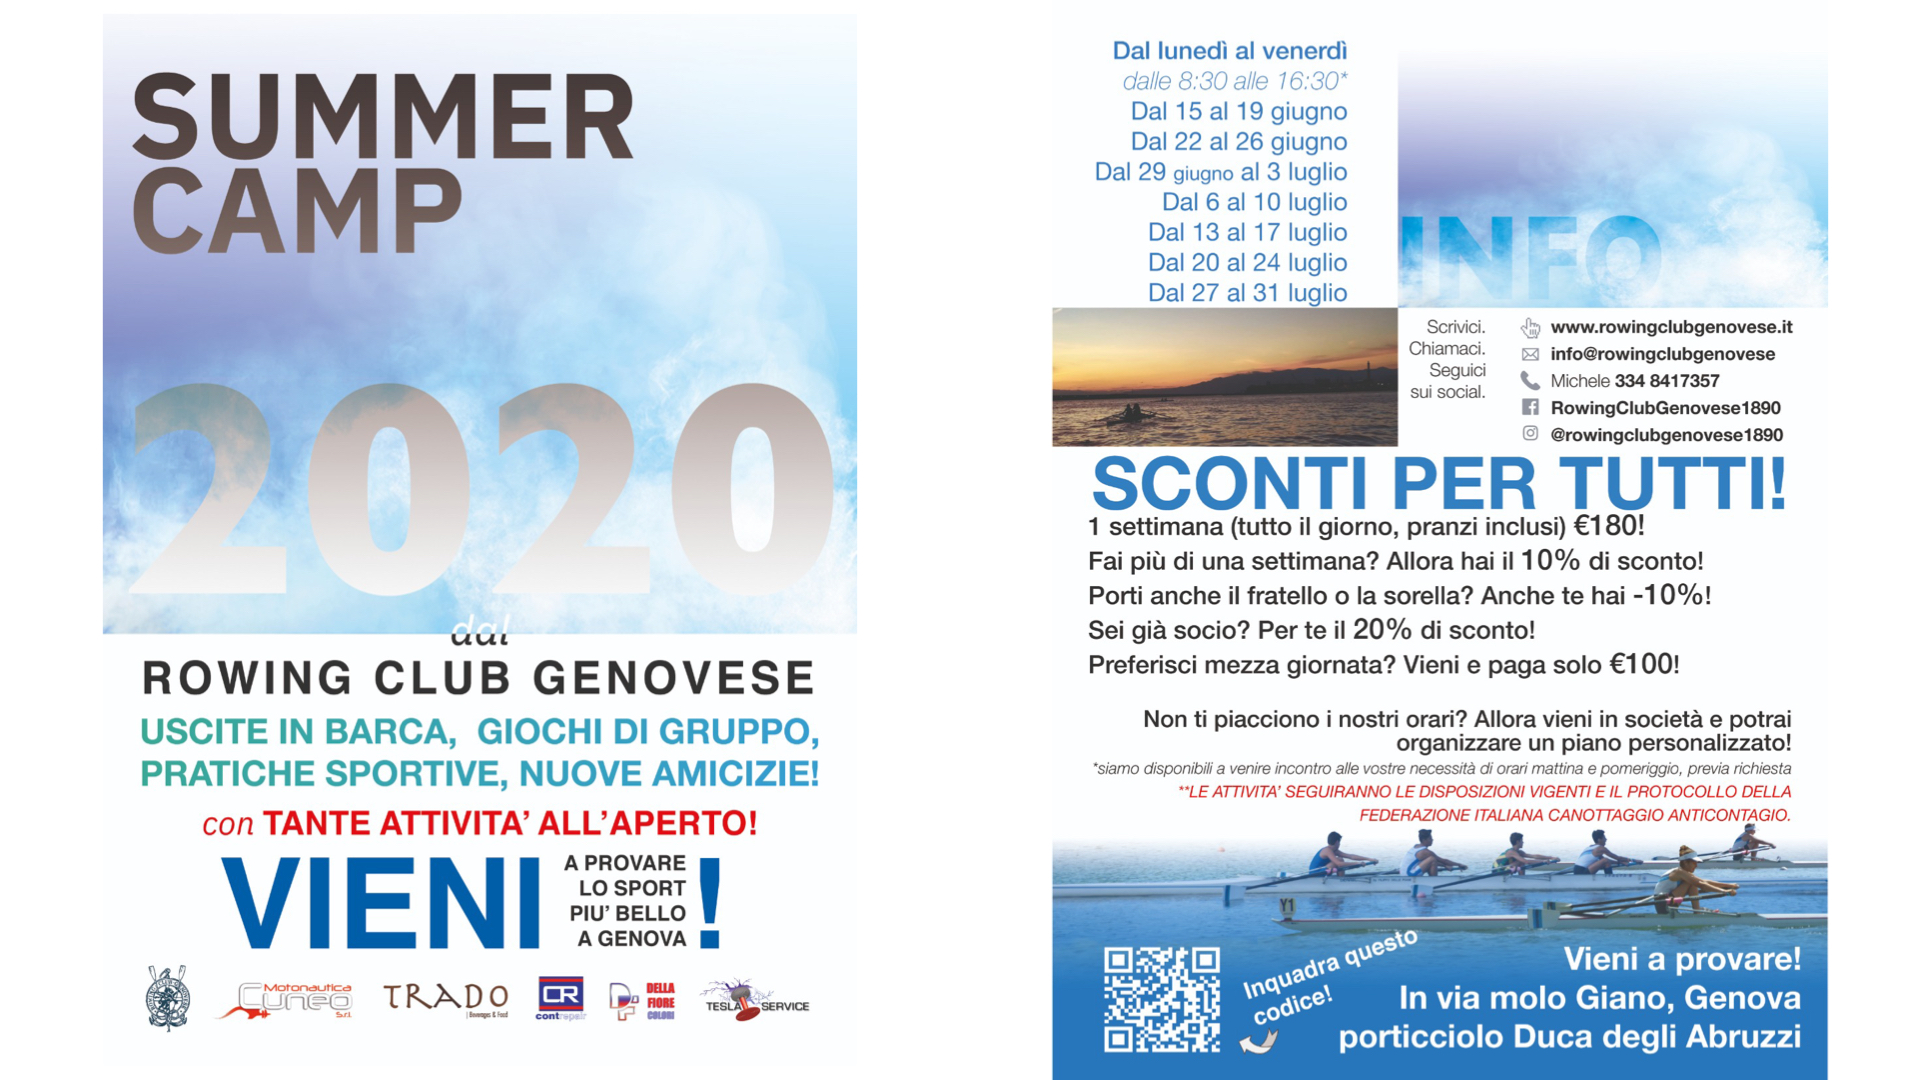 SUMMER CAMP 2020 al Rowing Club Genovese